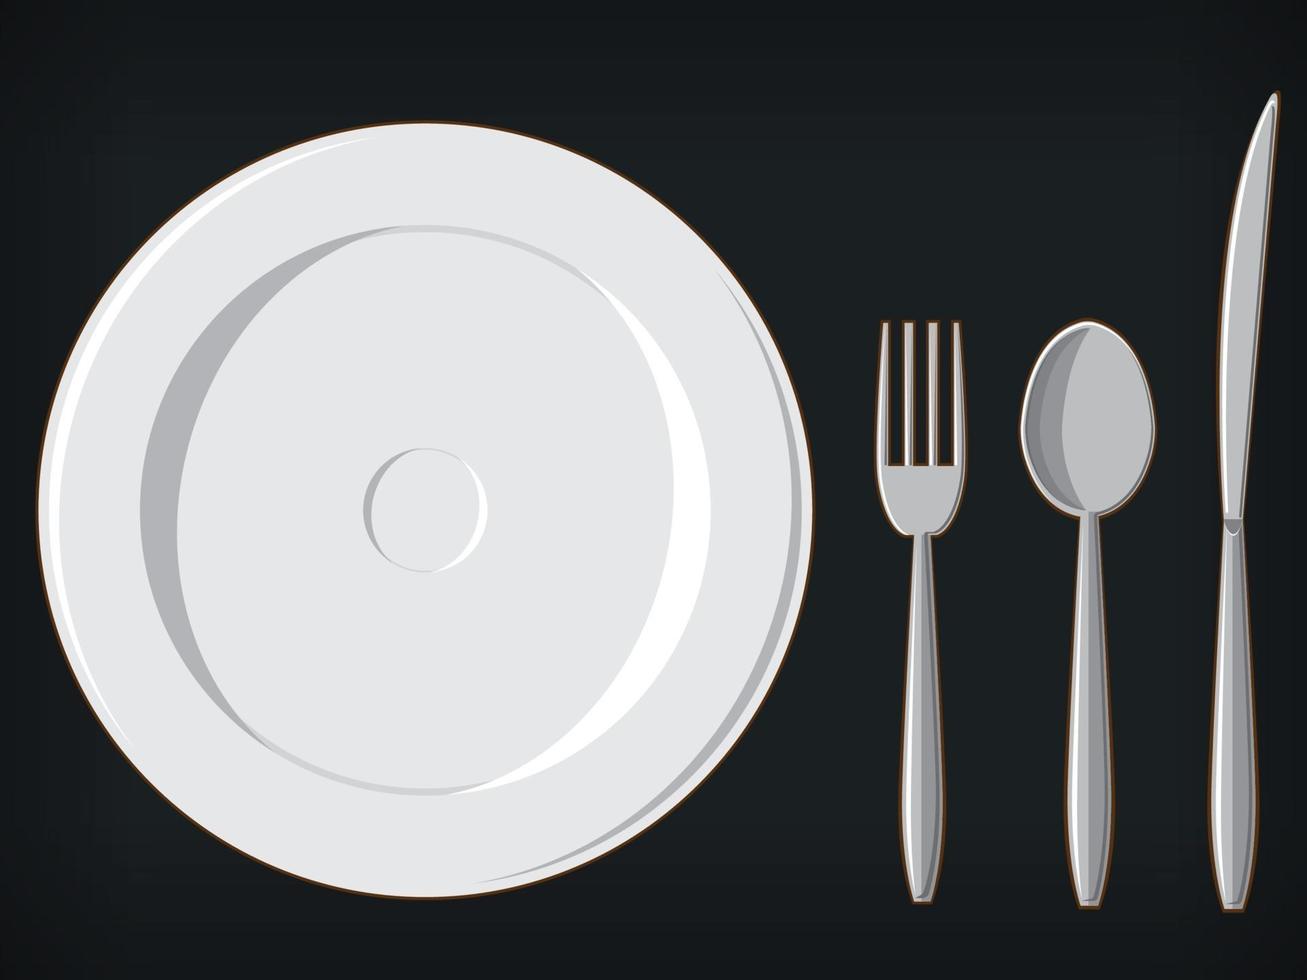 Banquet Formal Dining Utensils Plate Fork Spoon Knife Illustration vector